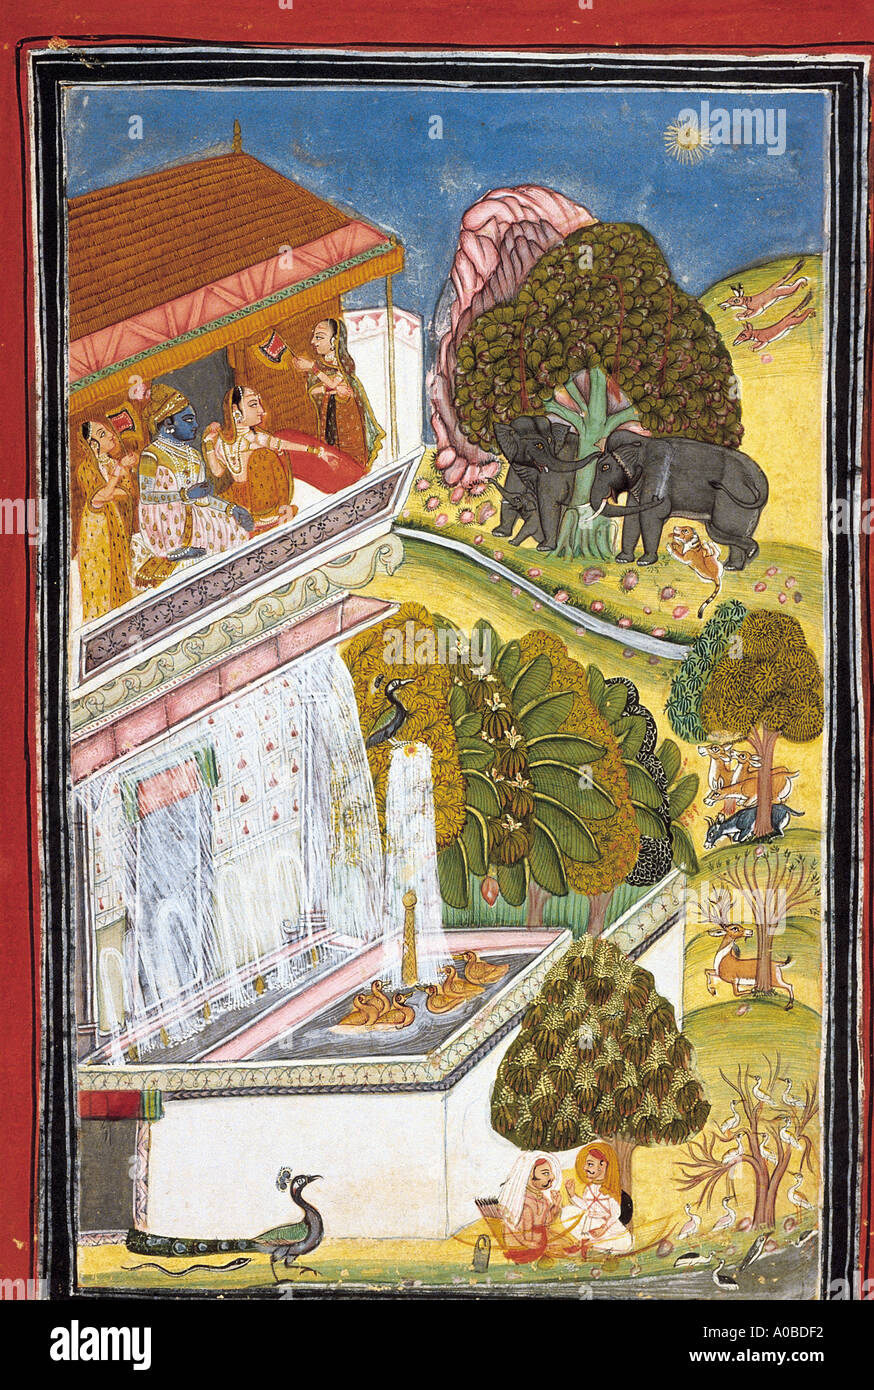 Baramasa Szene im Monat Jyestha. Kotah, Rajasthan, Indien. Datiert: 1775 n. Chr. Stockfoto